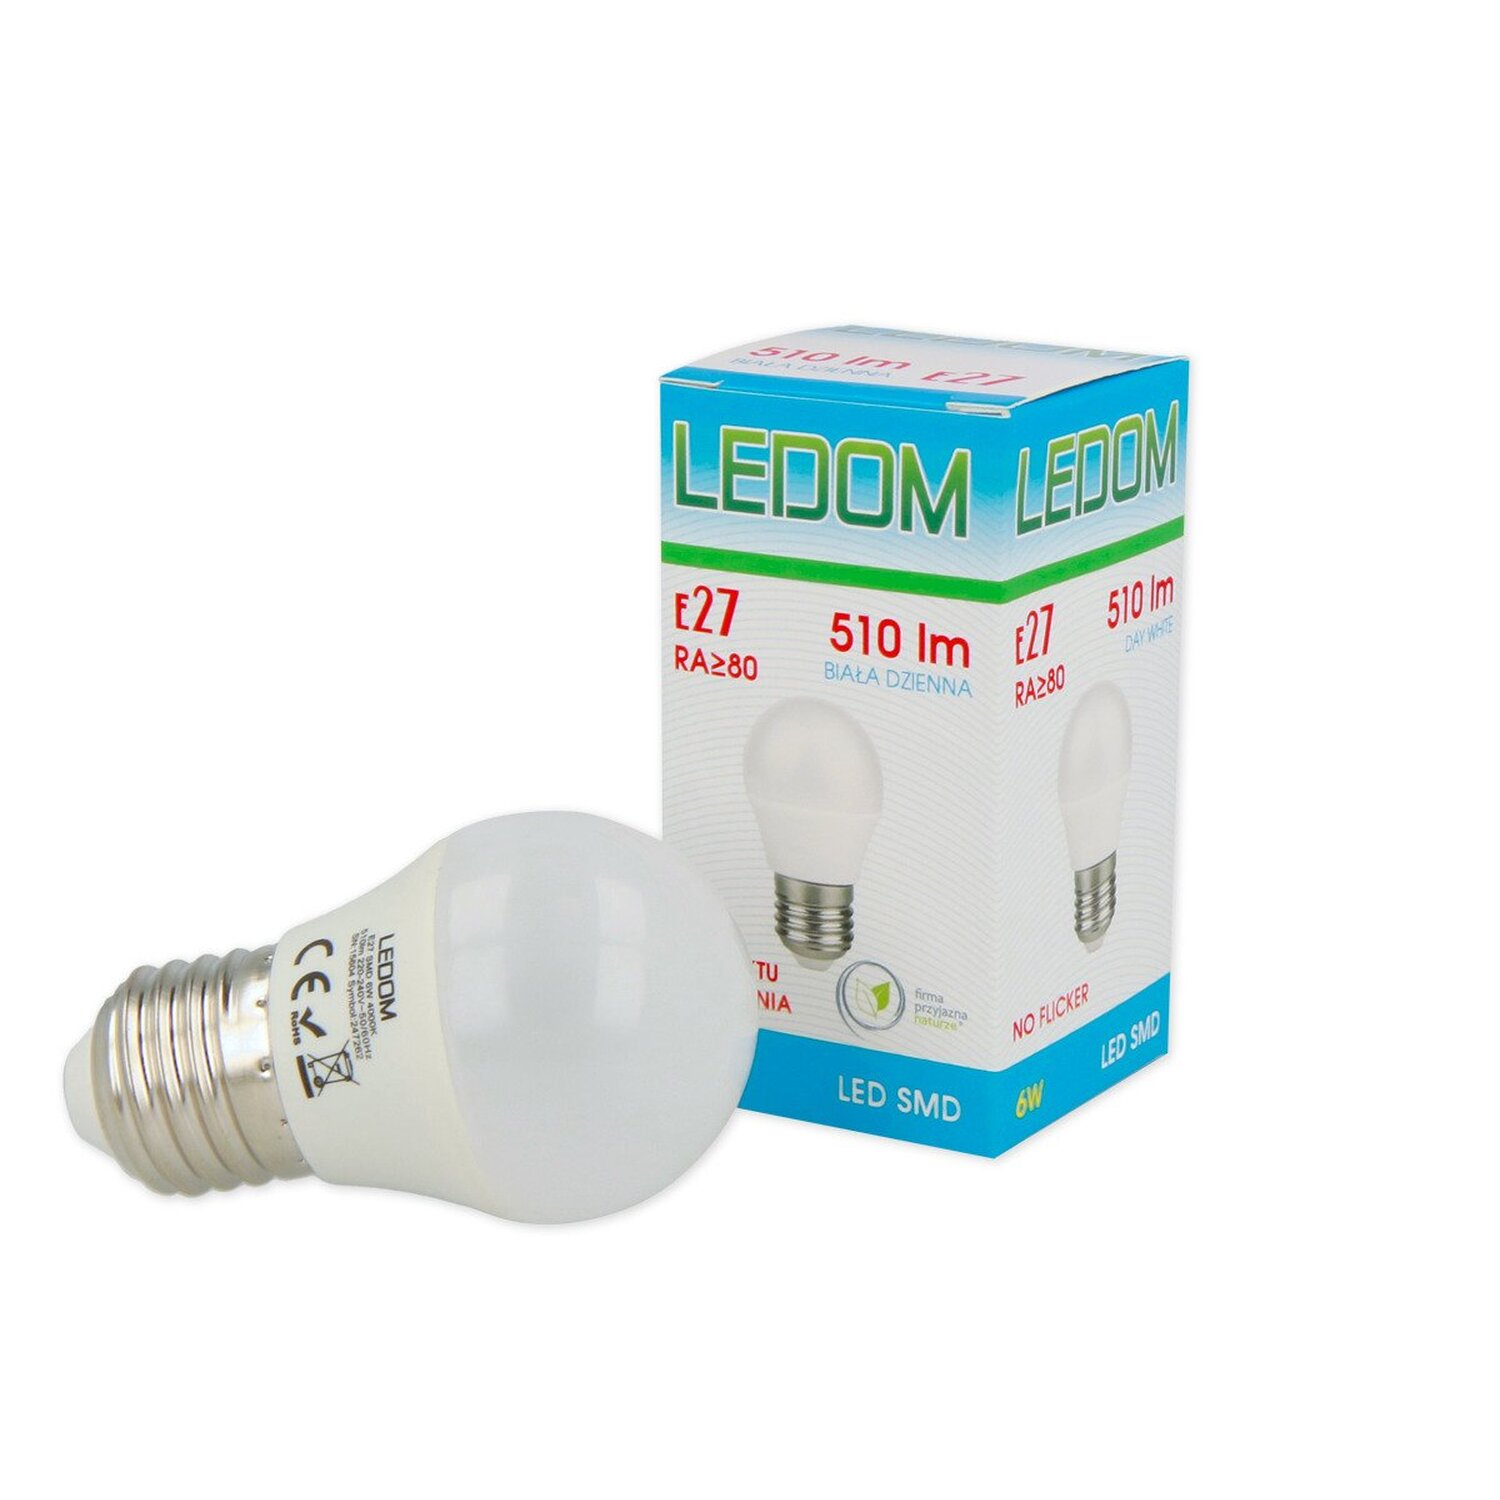 LED LINE Ø45 10 Leuchtmittel Stück E27 6W Neutralweiß SMD 230V AC LED 220-240V Lumen 510